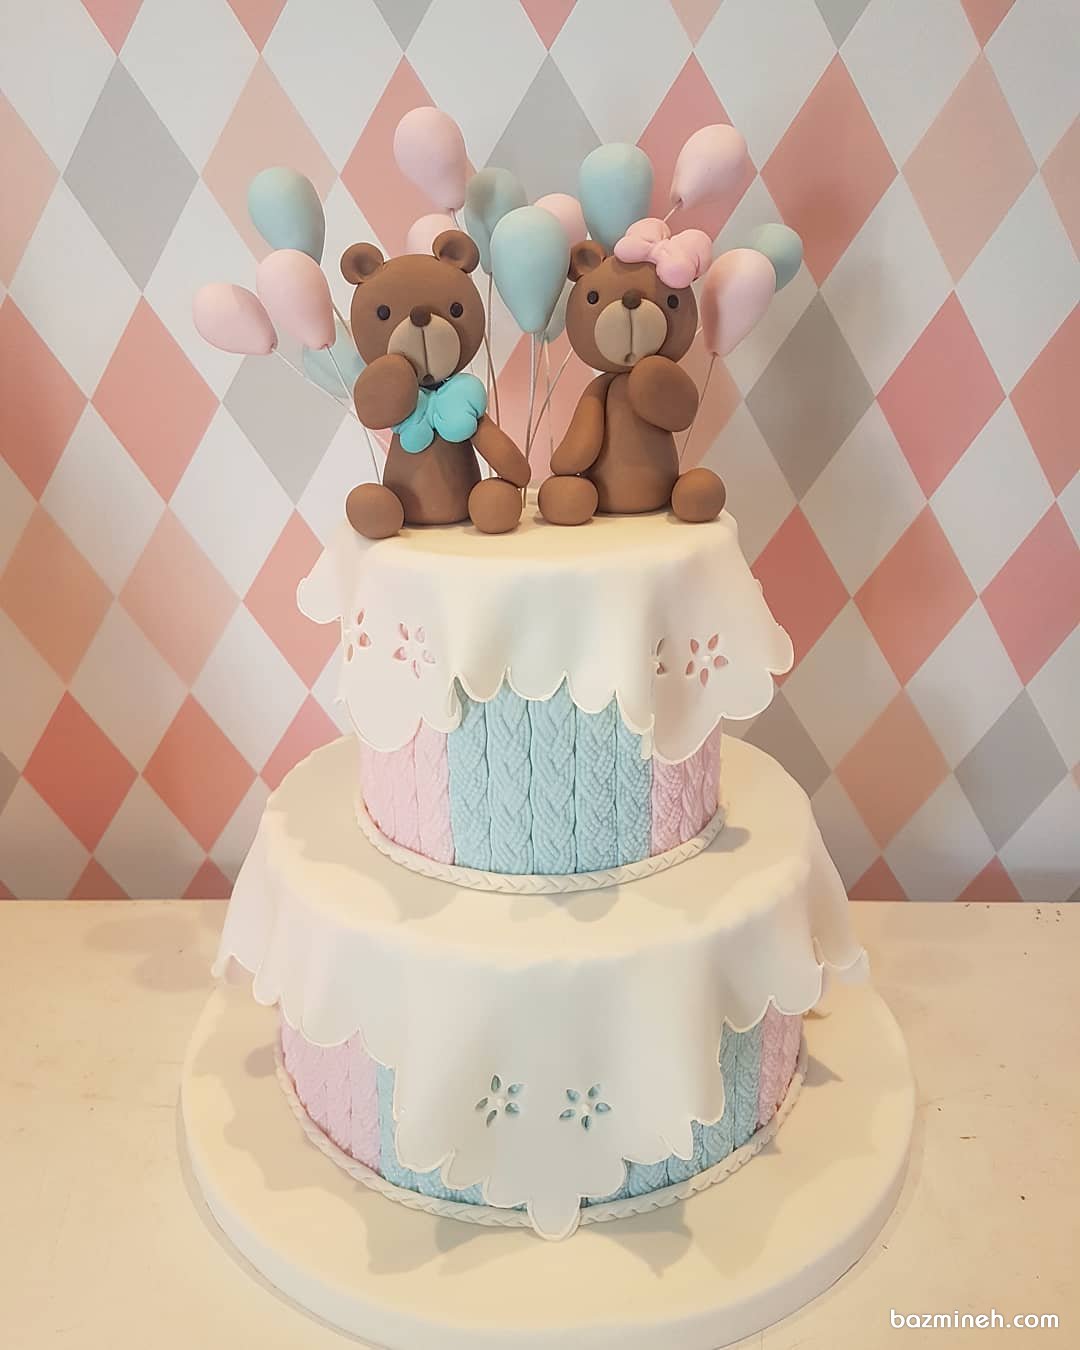 کیک دو طبقه فوندانت جشن تعیین جنسیت یا بیبی شاور با تم خرس تدی صورتی آبی